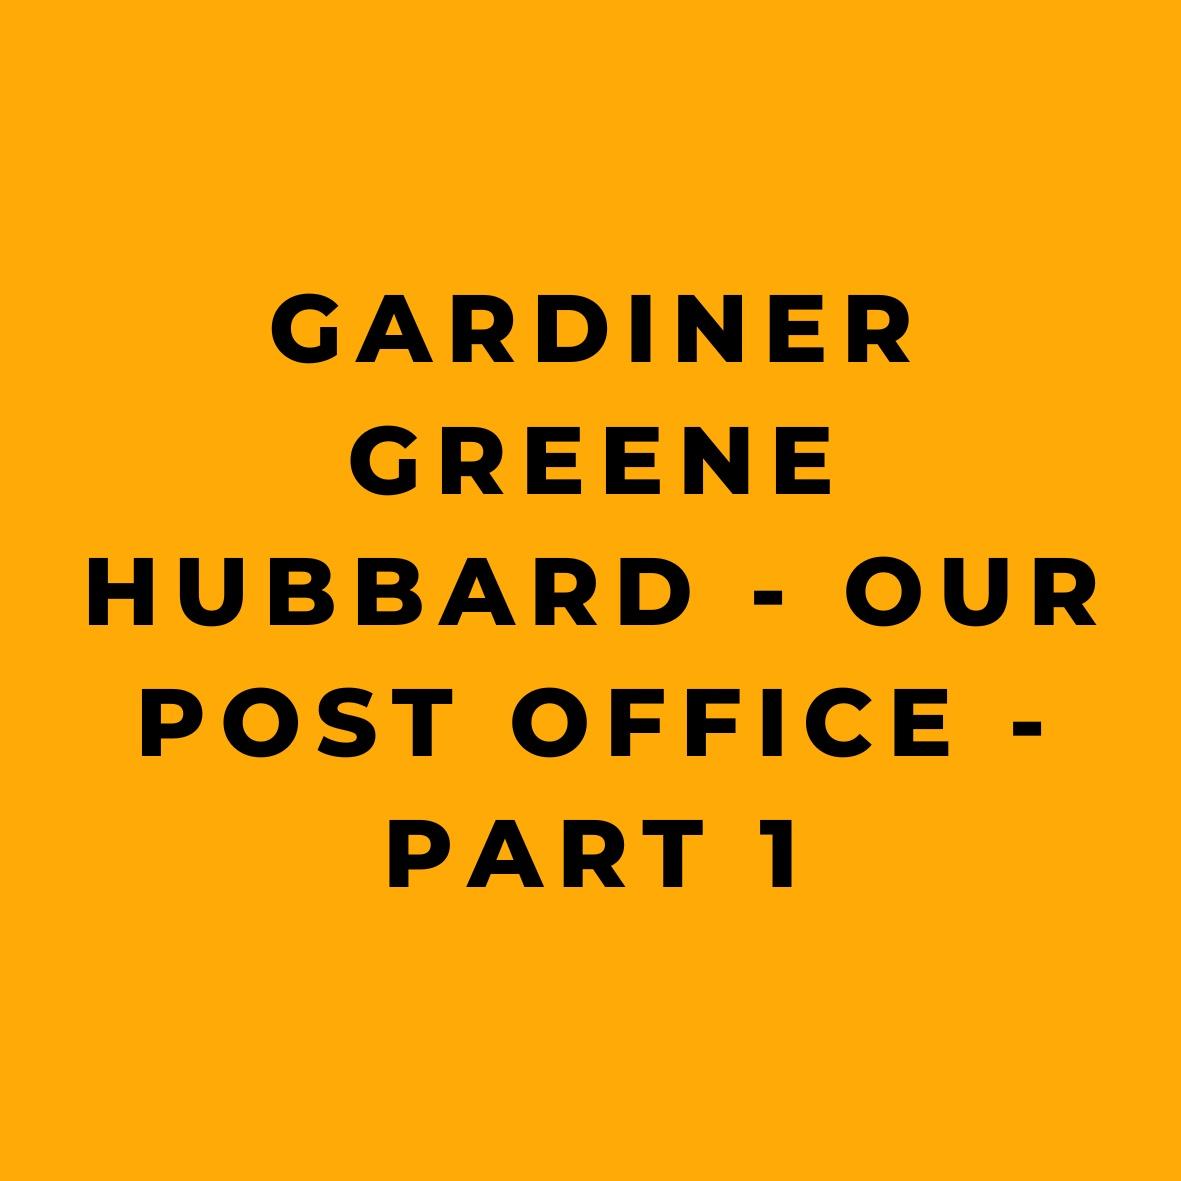 Gardiner Greene Hubbard - Our Post Office - Part 1